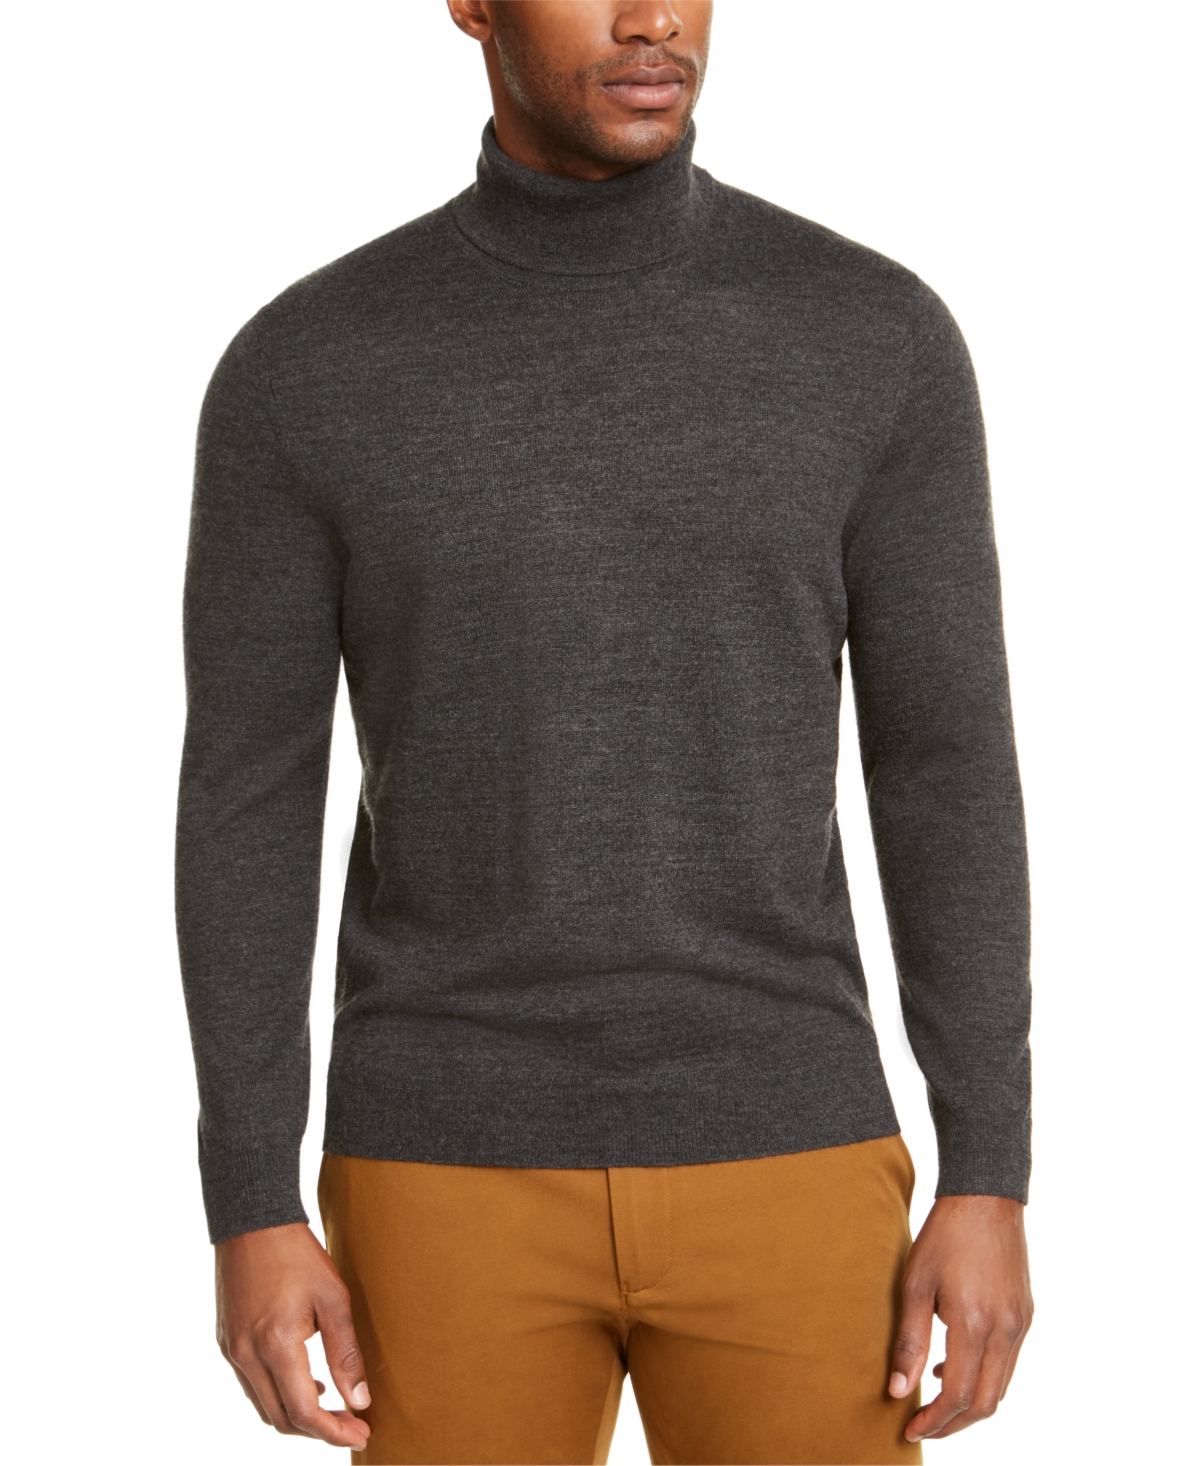 Men's Merino Wool Blend Turtleneck Sweater, Created for Macy's - Ebony Heather